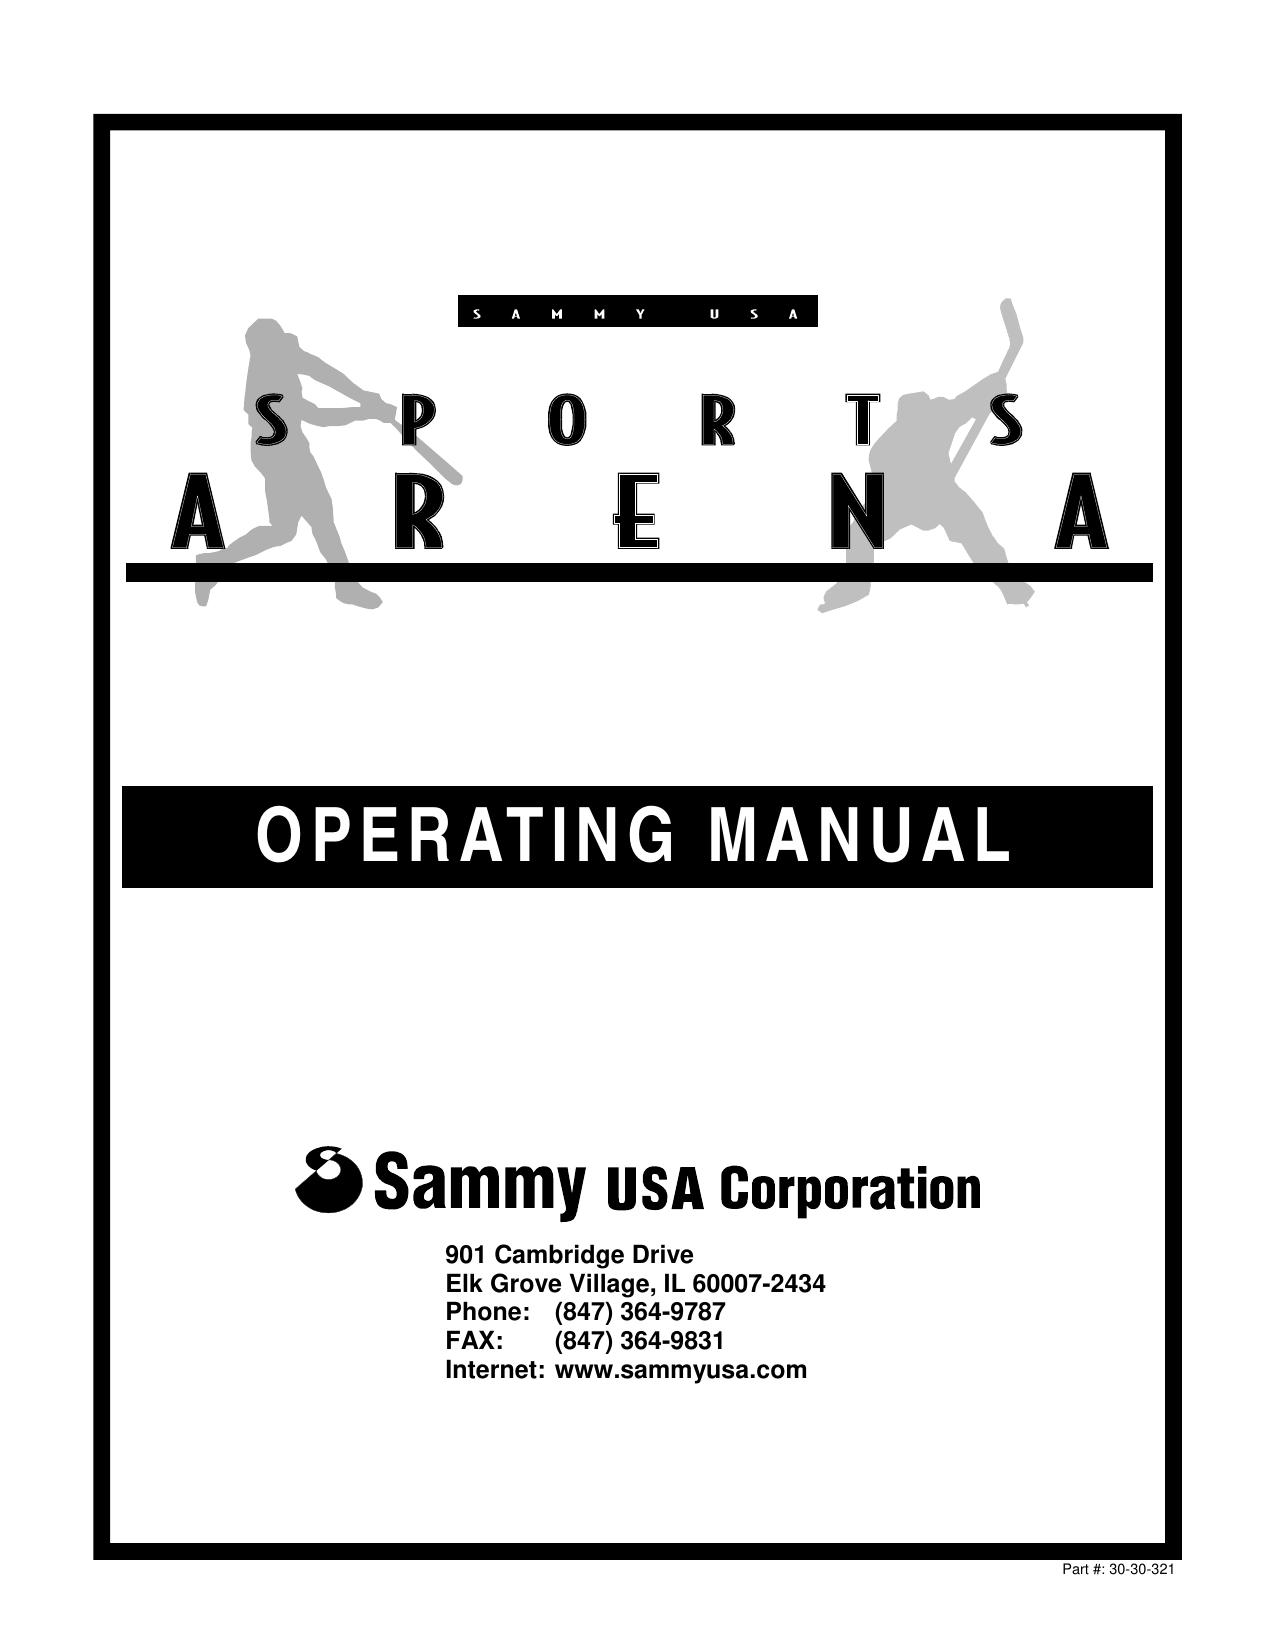 S Arena Operating Manual 0298 Update.pub